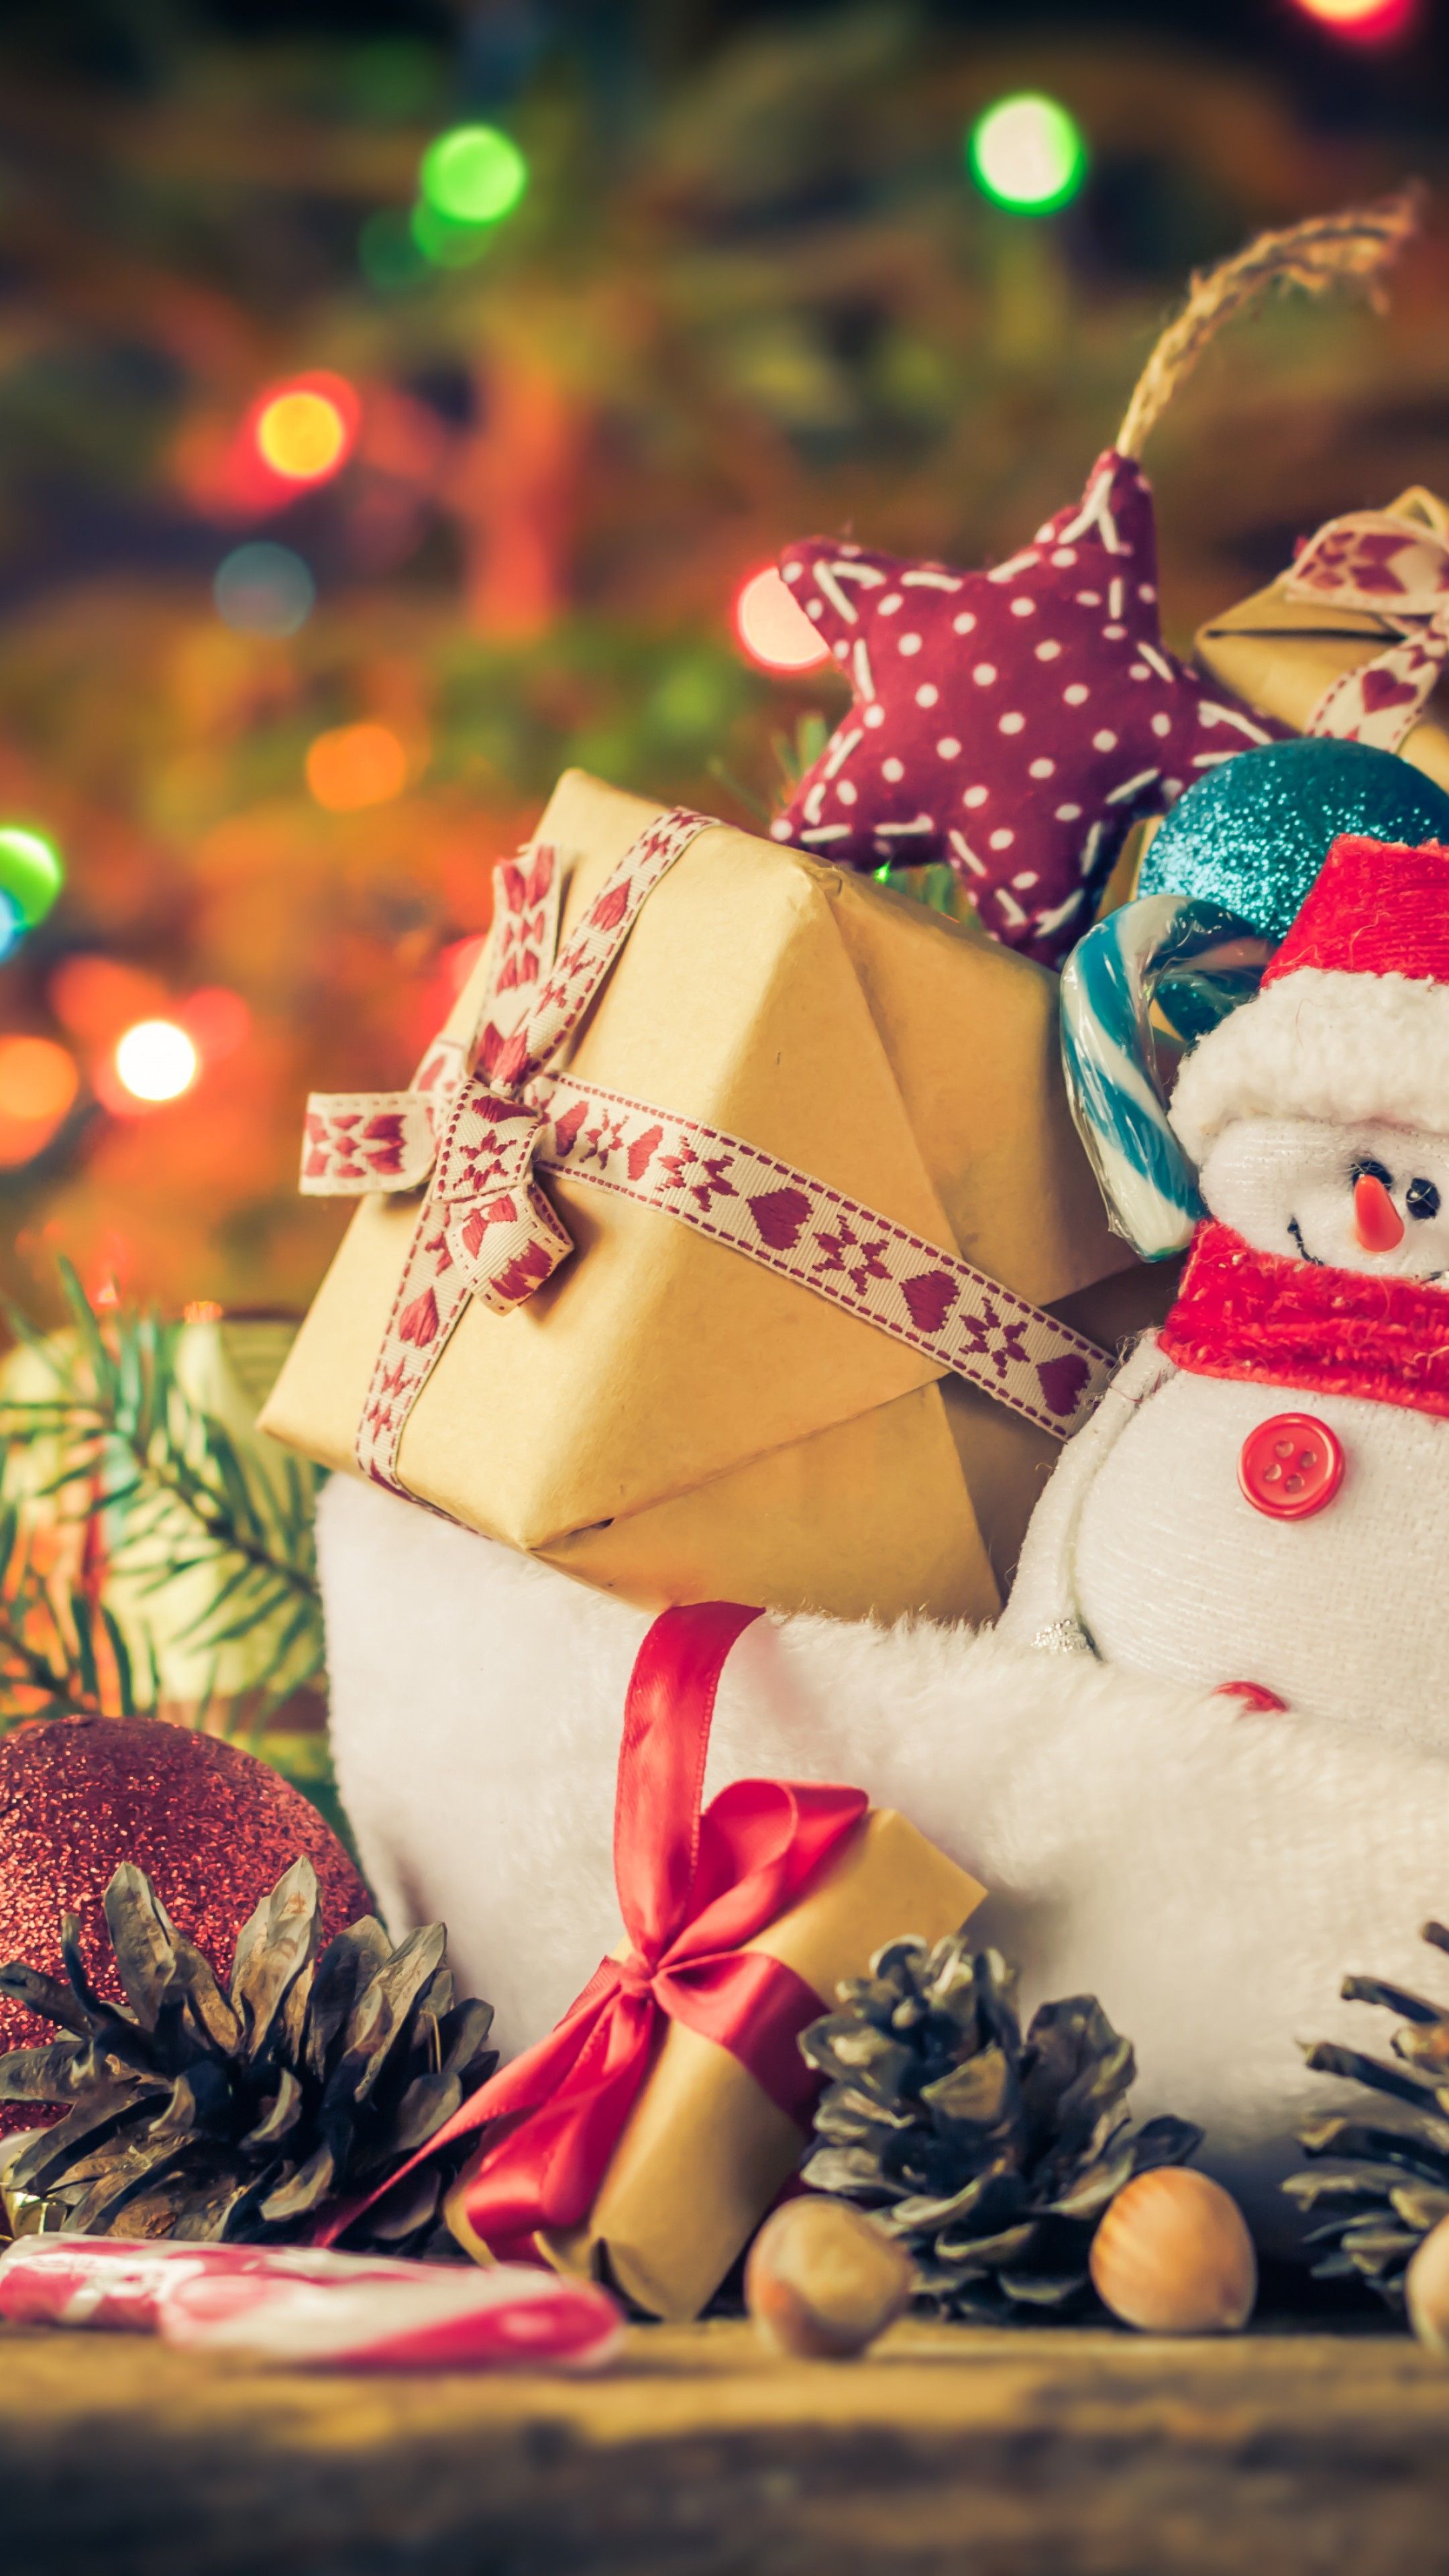 Wallpaper New year, Christmas, gifts, snowman, 4k, Holidays